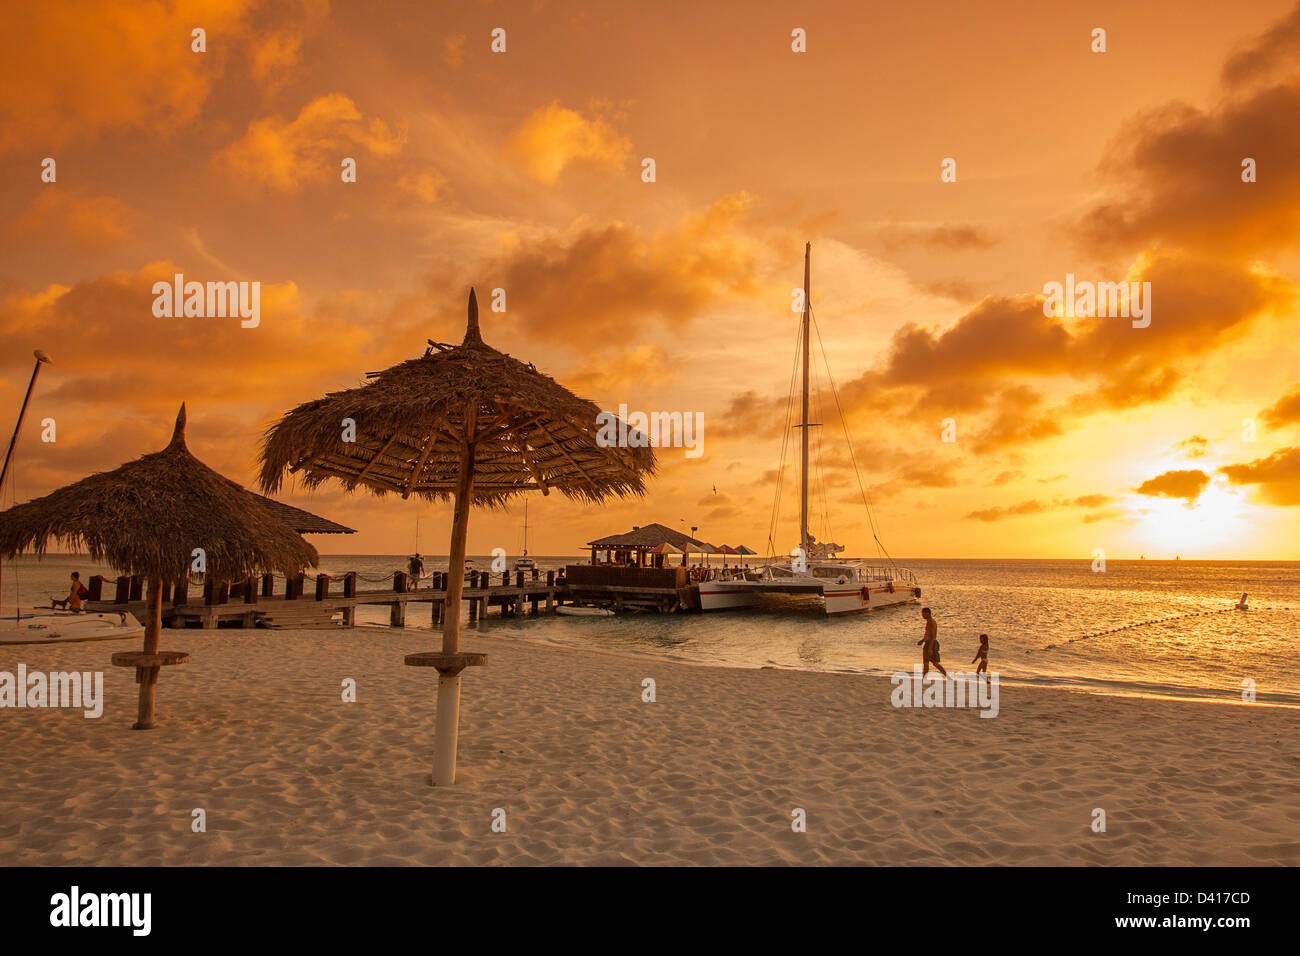 Sunset West Palm Beach Aruba Antillas Holandesas Centroamérica Caribe catamarán ABC Foto de stock